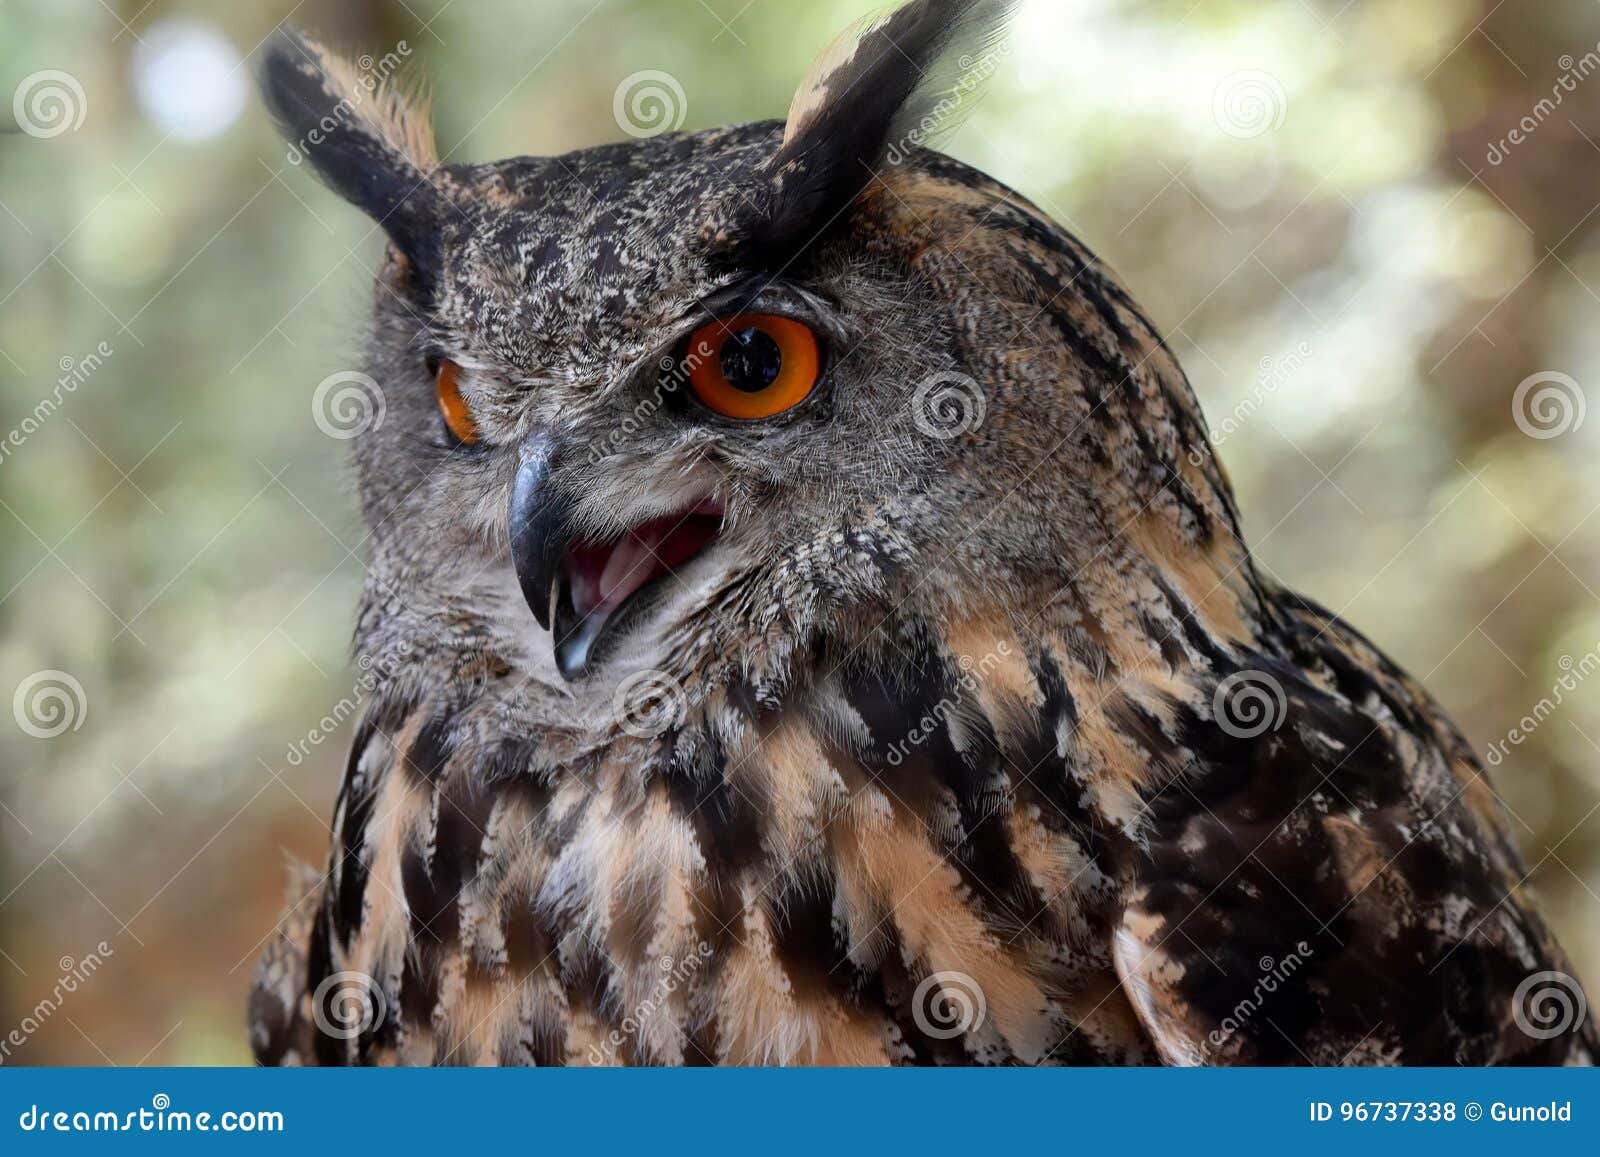 Eagle owl stock photo. Image of direct, animal, detail - 96737338